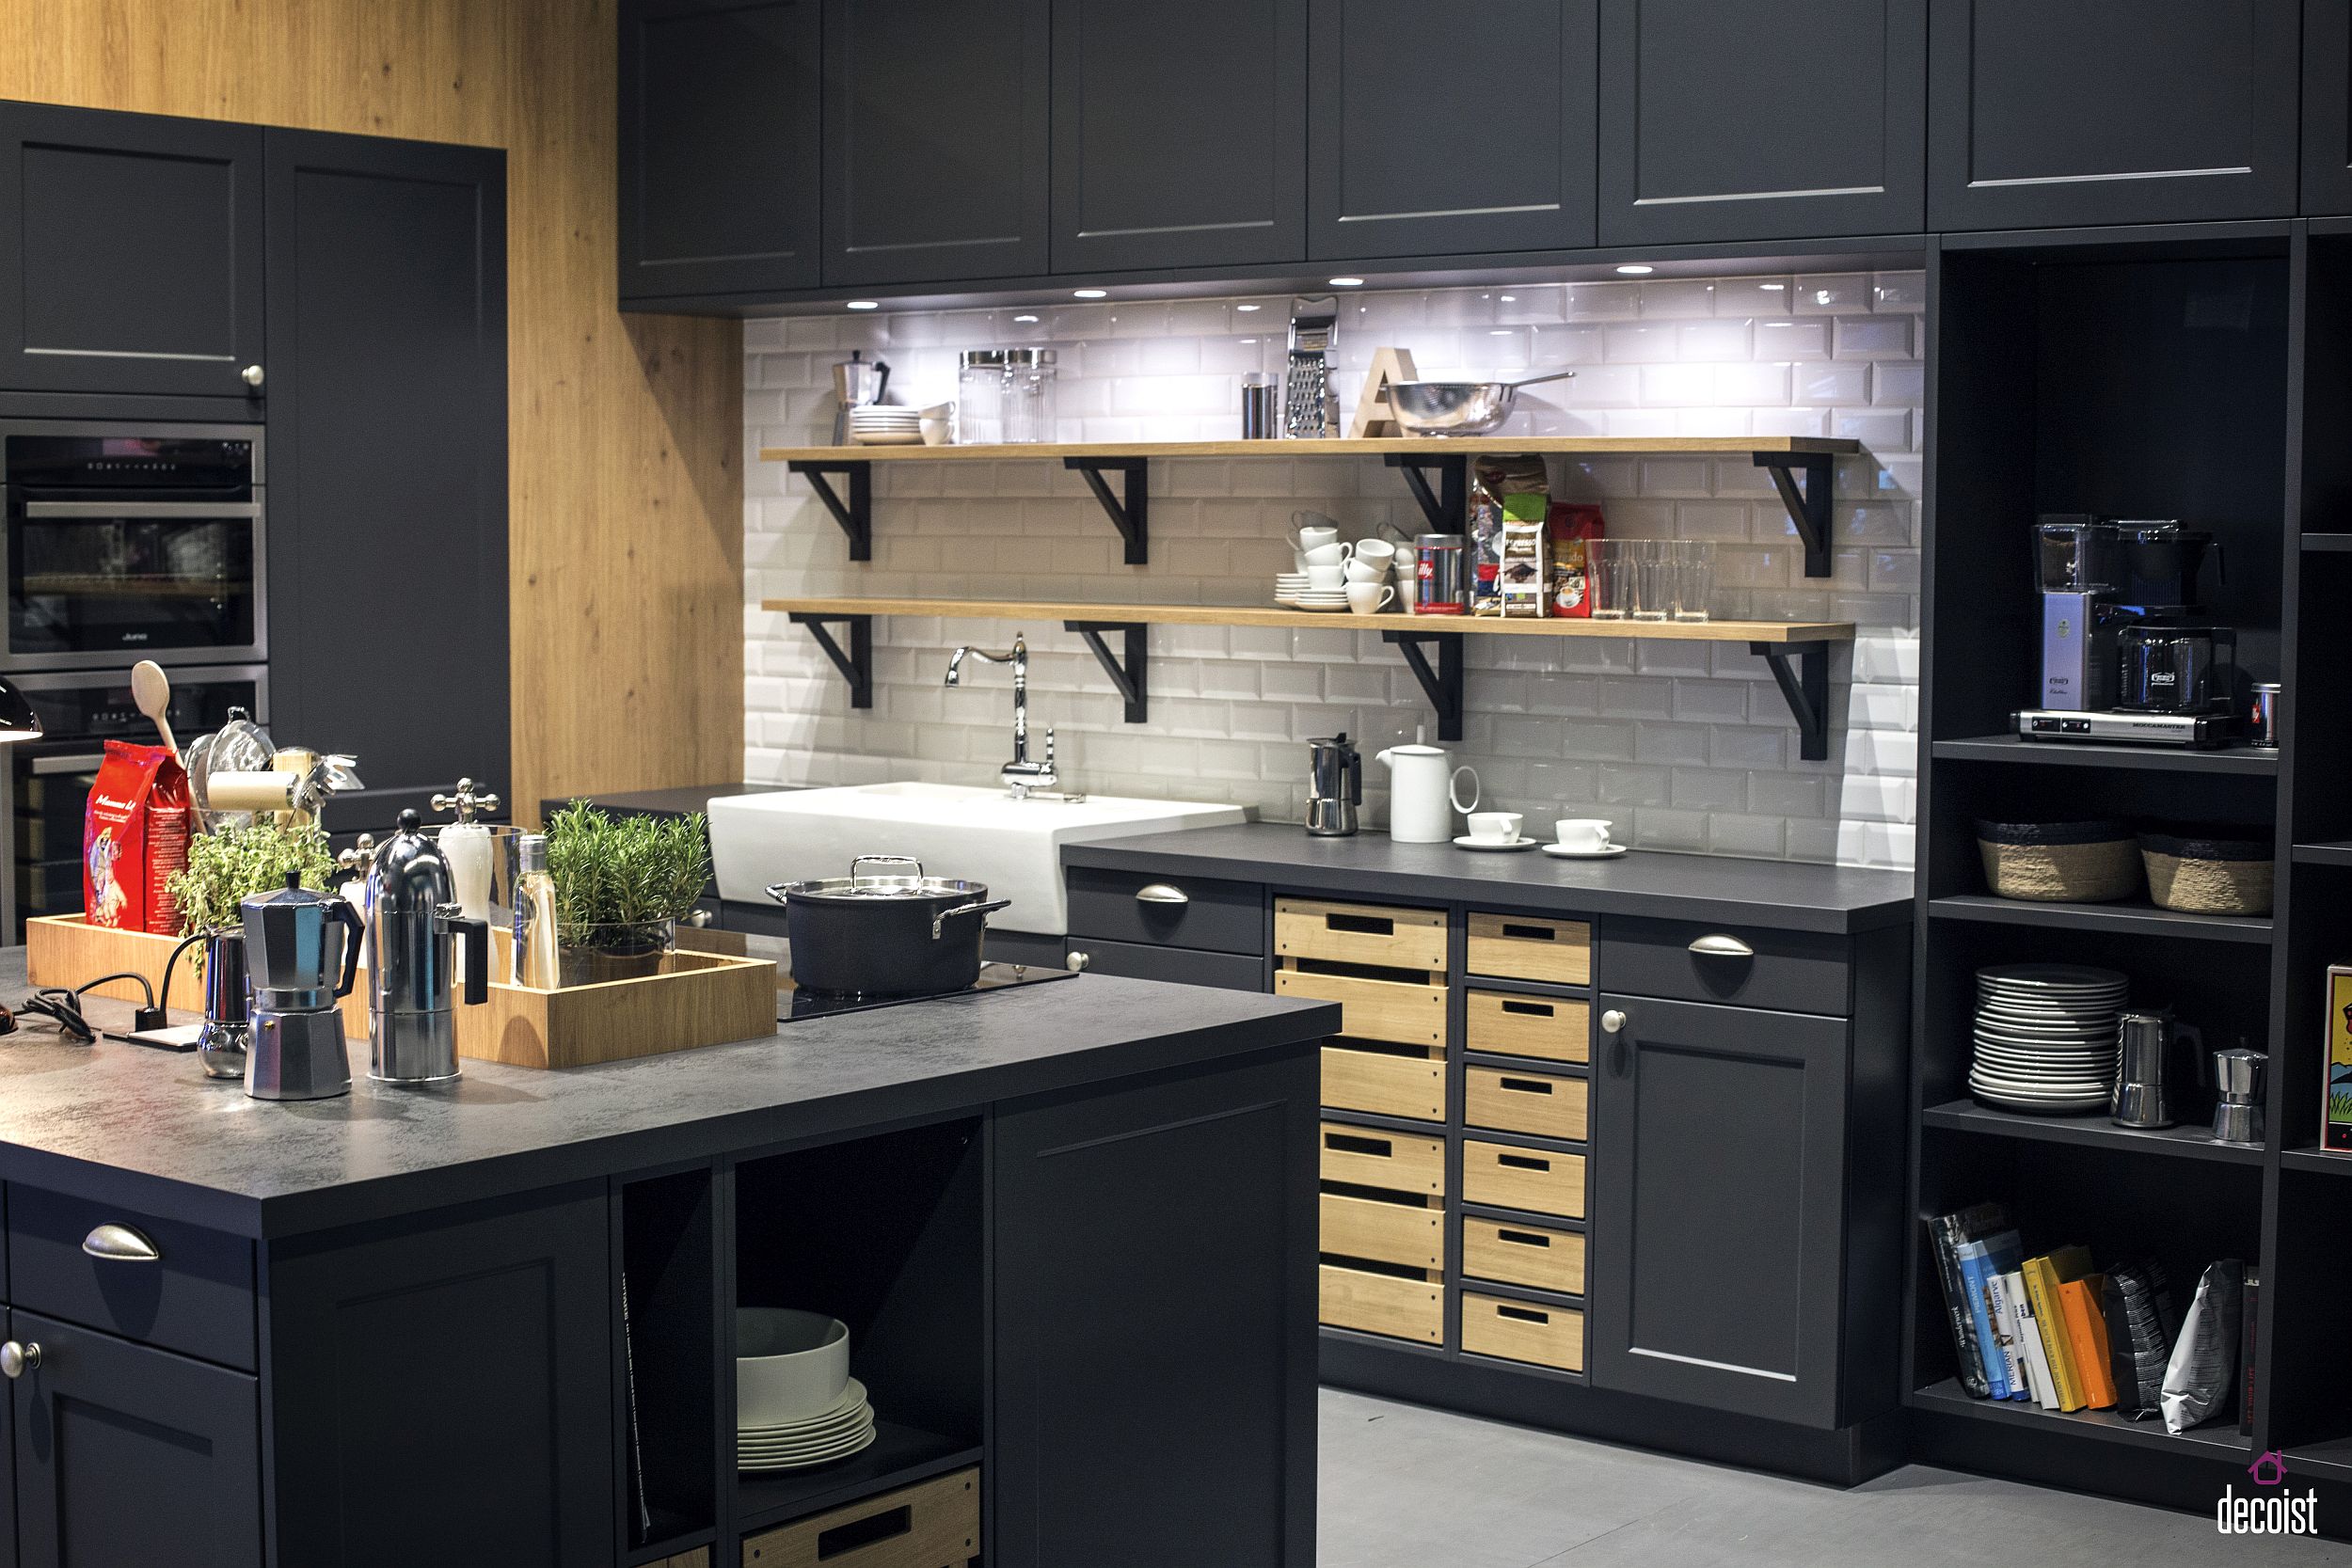 Comapct-and-creative-kitchen-design-has-it-all